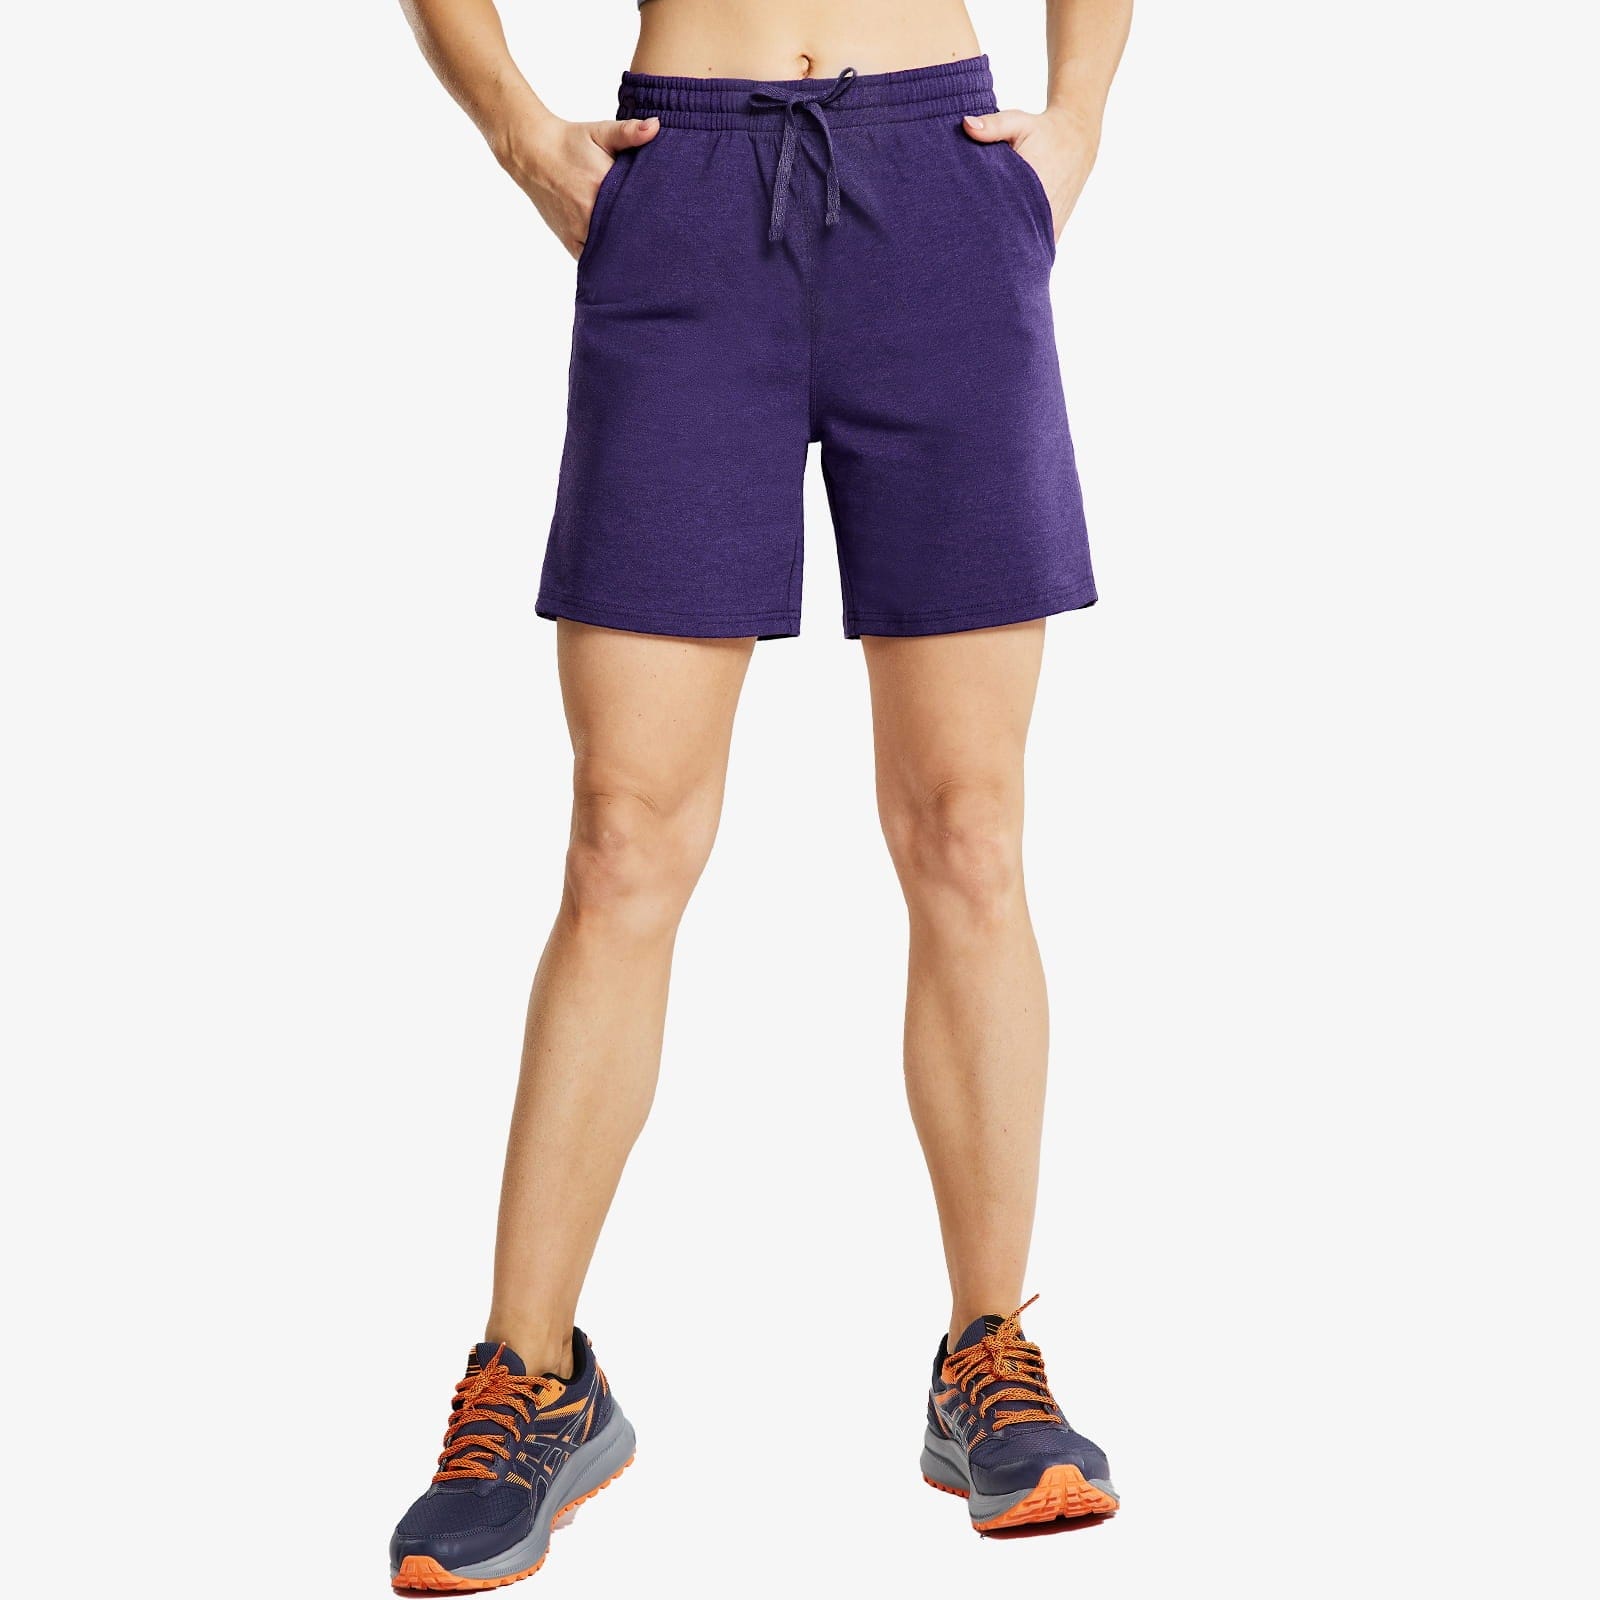 Women's Bermuda Cotton Shorts with Pockets Lightweight & Stretch Women Shorts Purple / S MIER